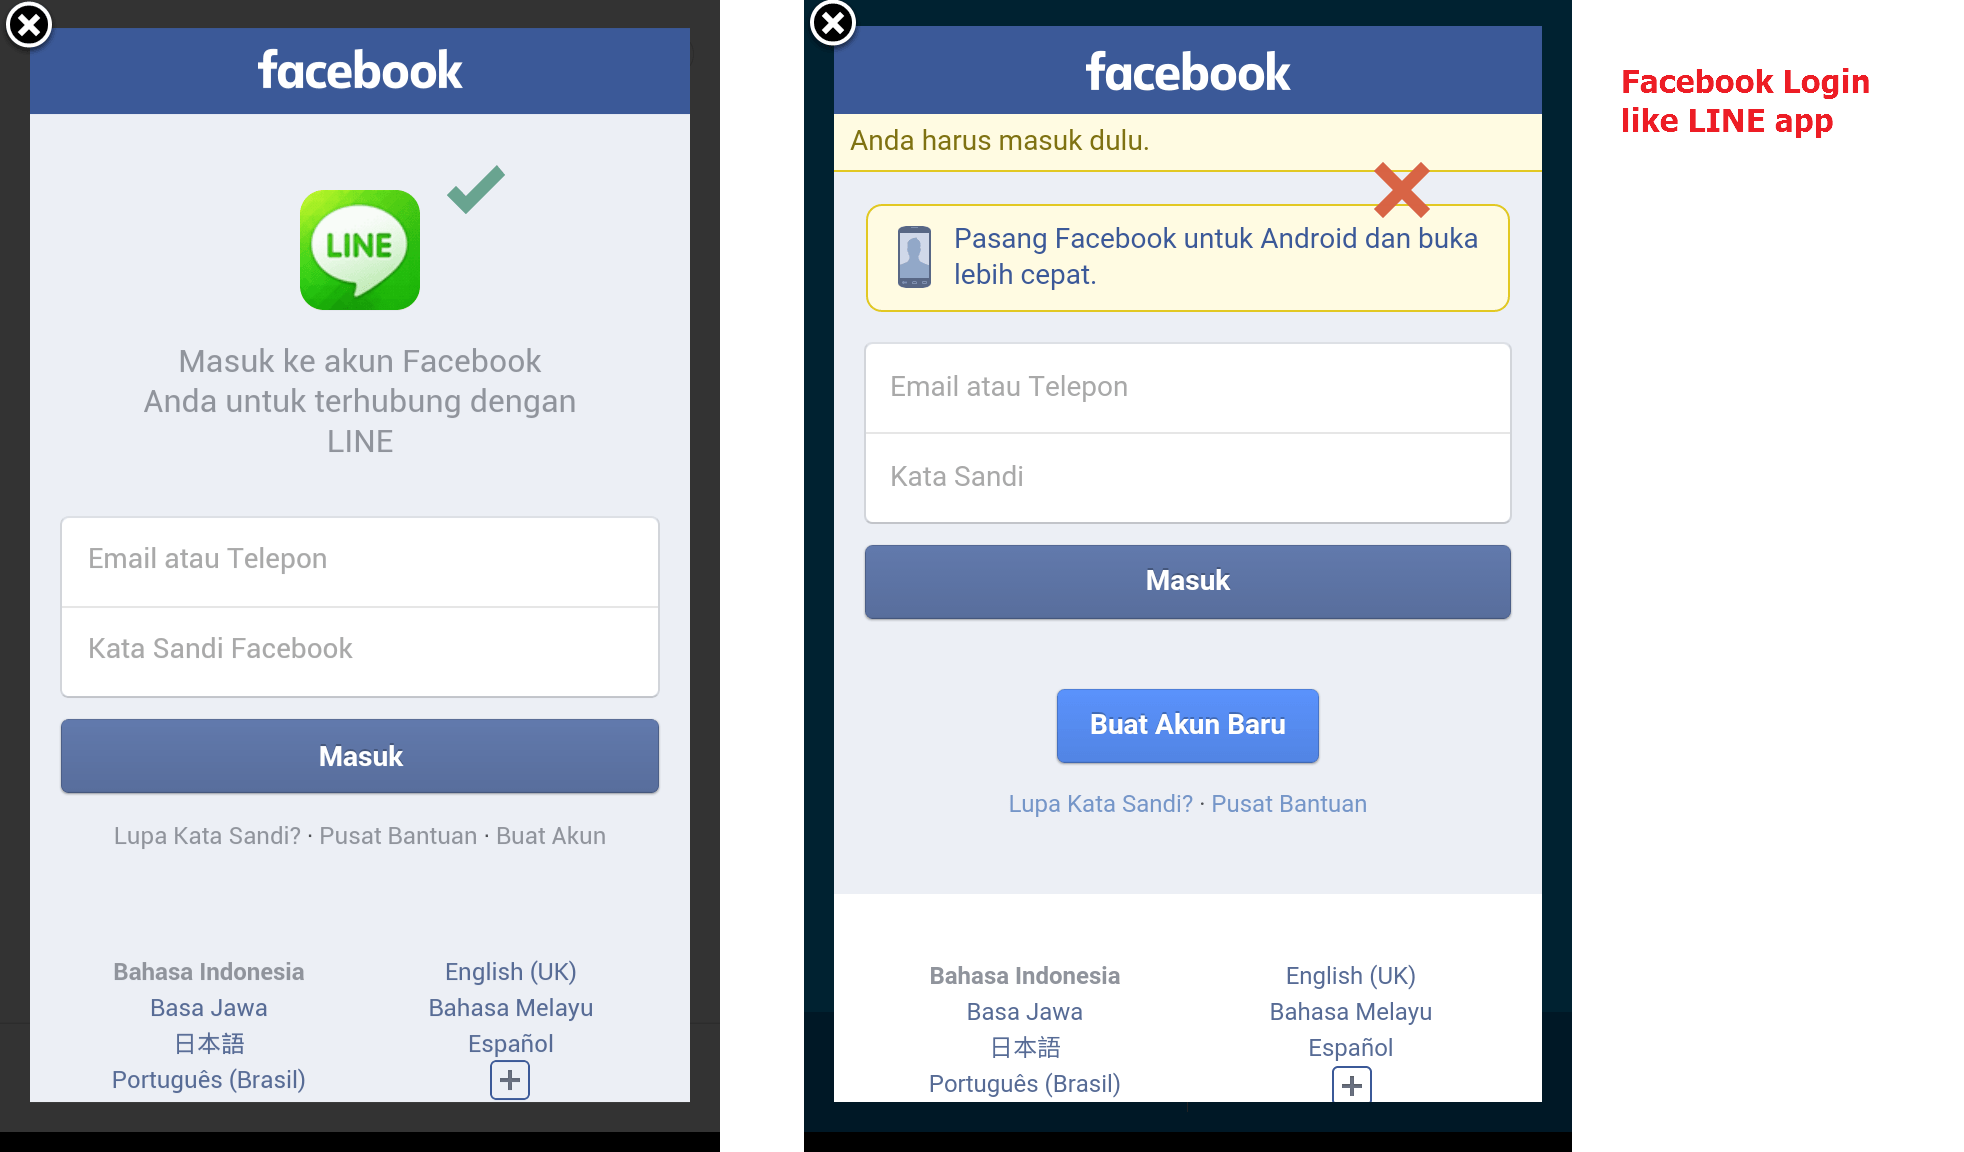 Facebook App Logo - Facebook Login WebView display not show my Facebook App logo